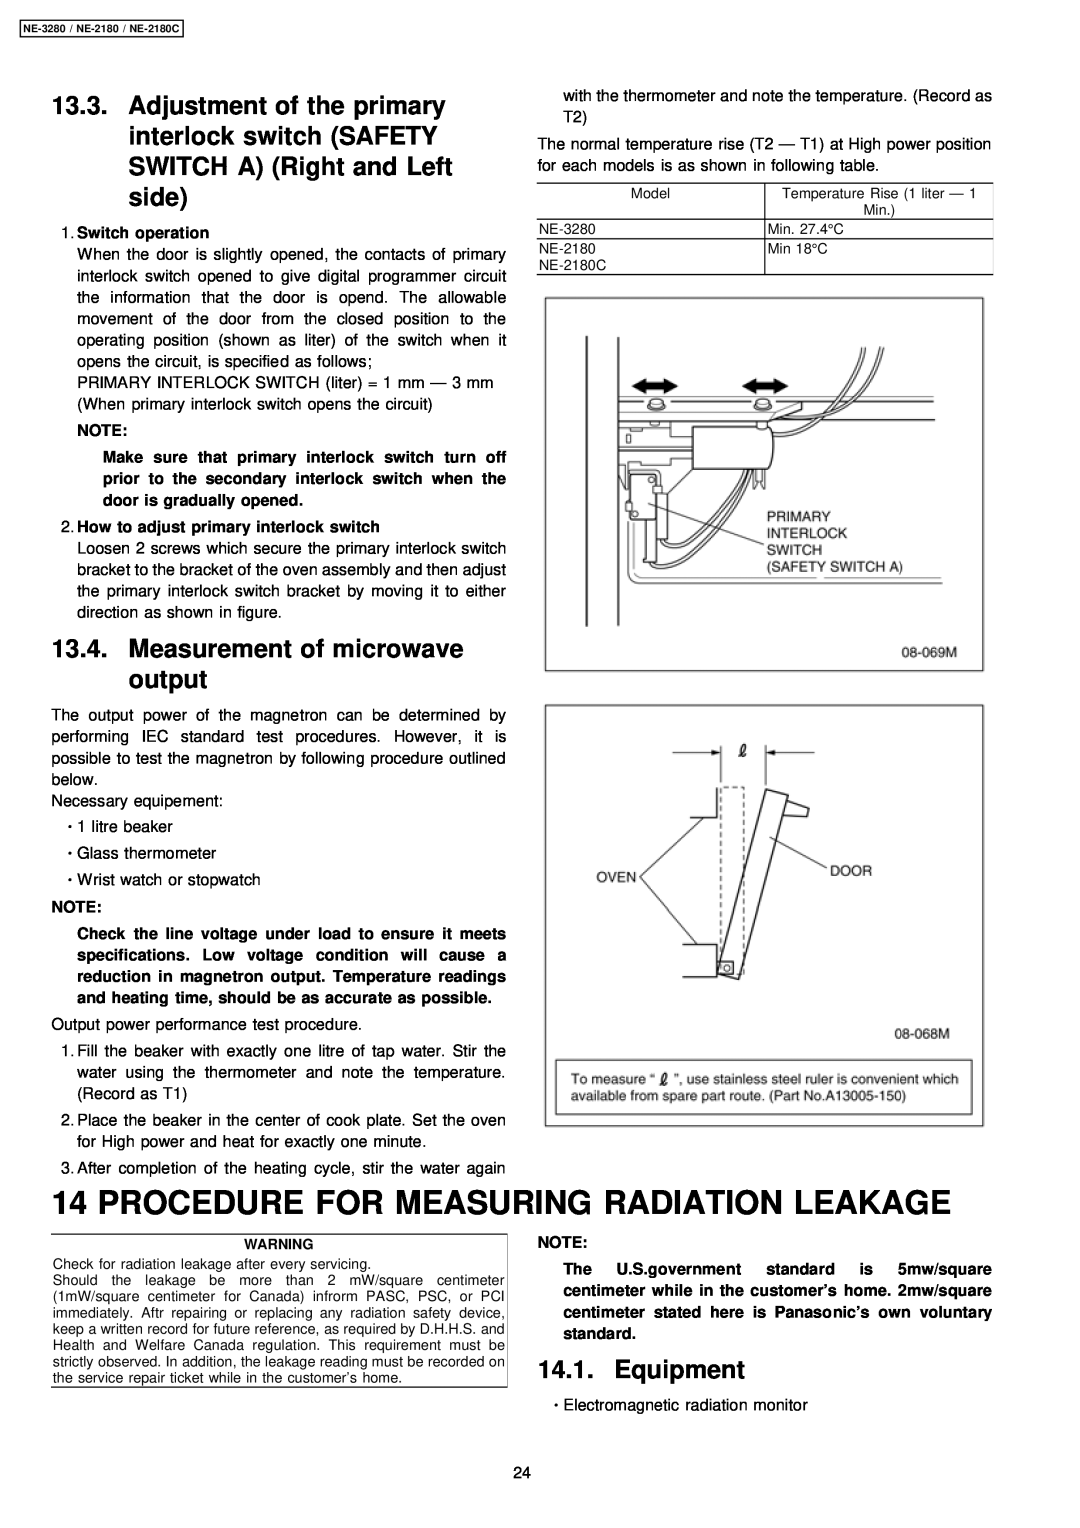 Panasonic NE-3280, NE-2180C manual Procedure For Measuring Radiation Leakage, Measurement of microwave output, Equipment 